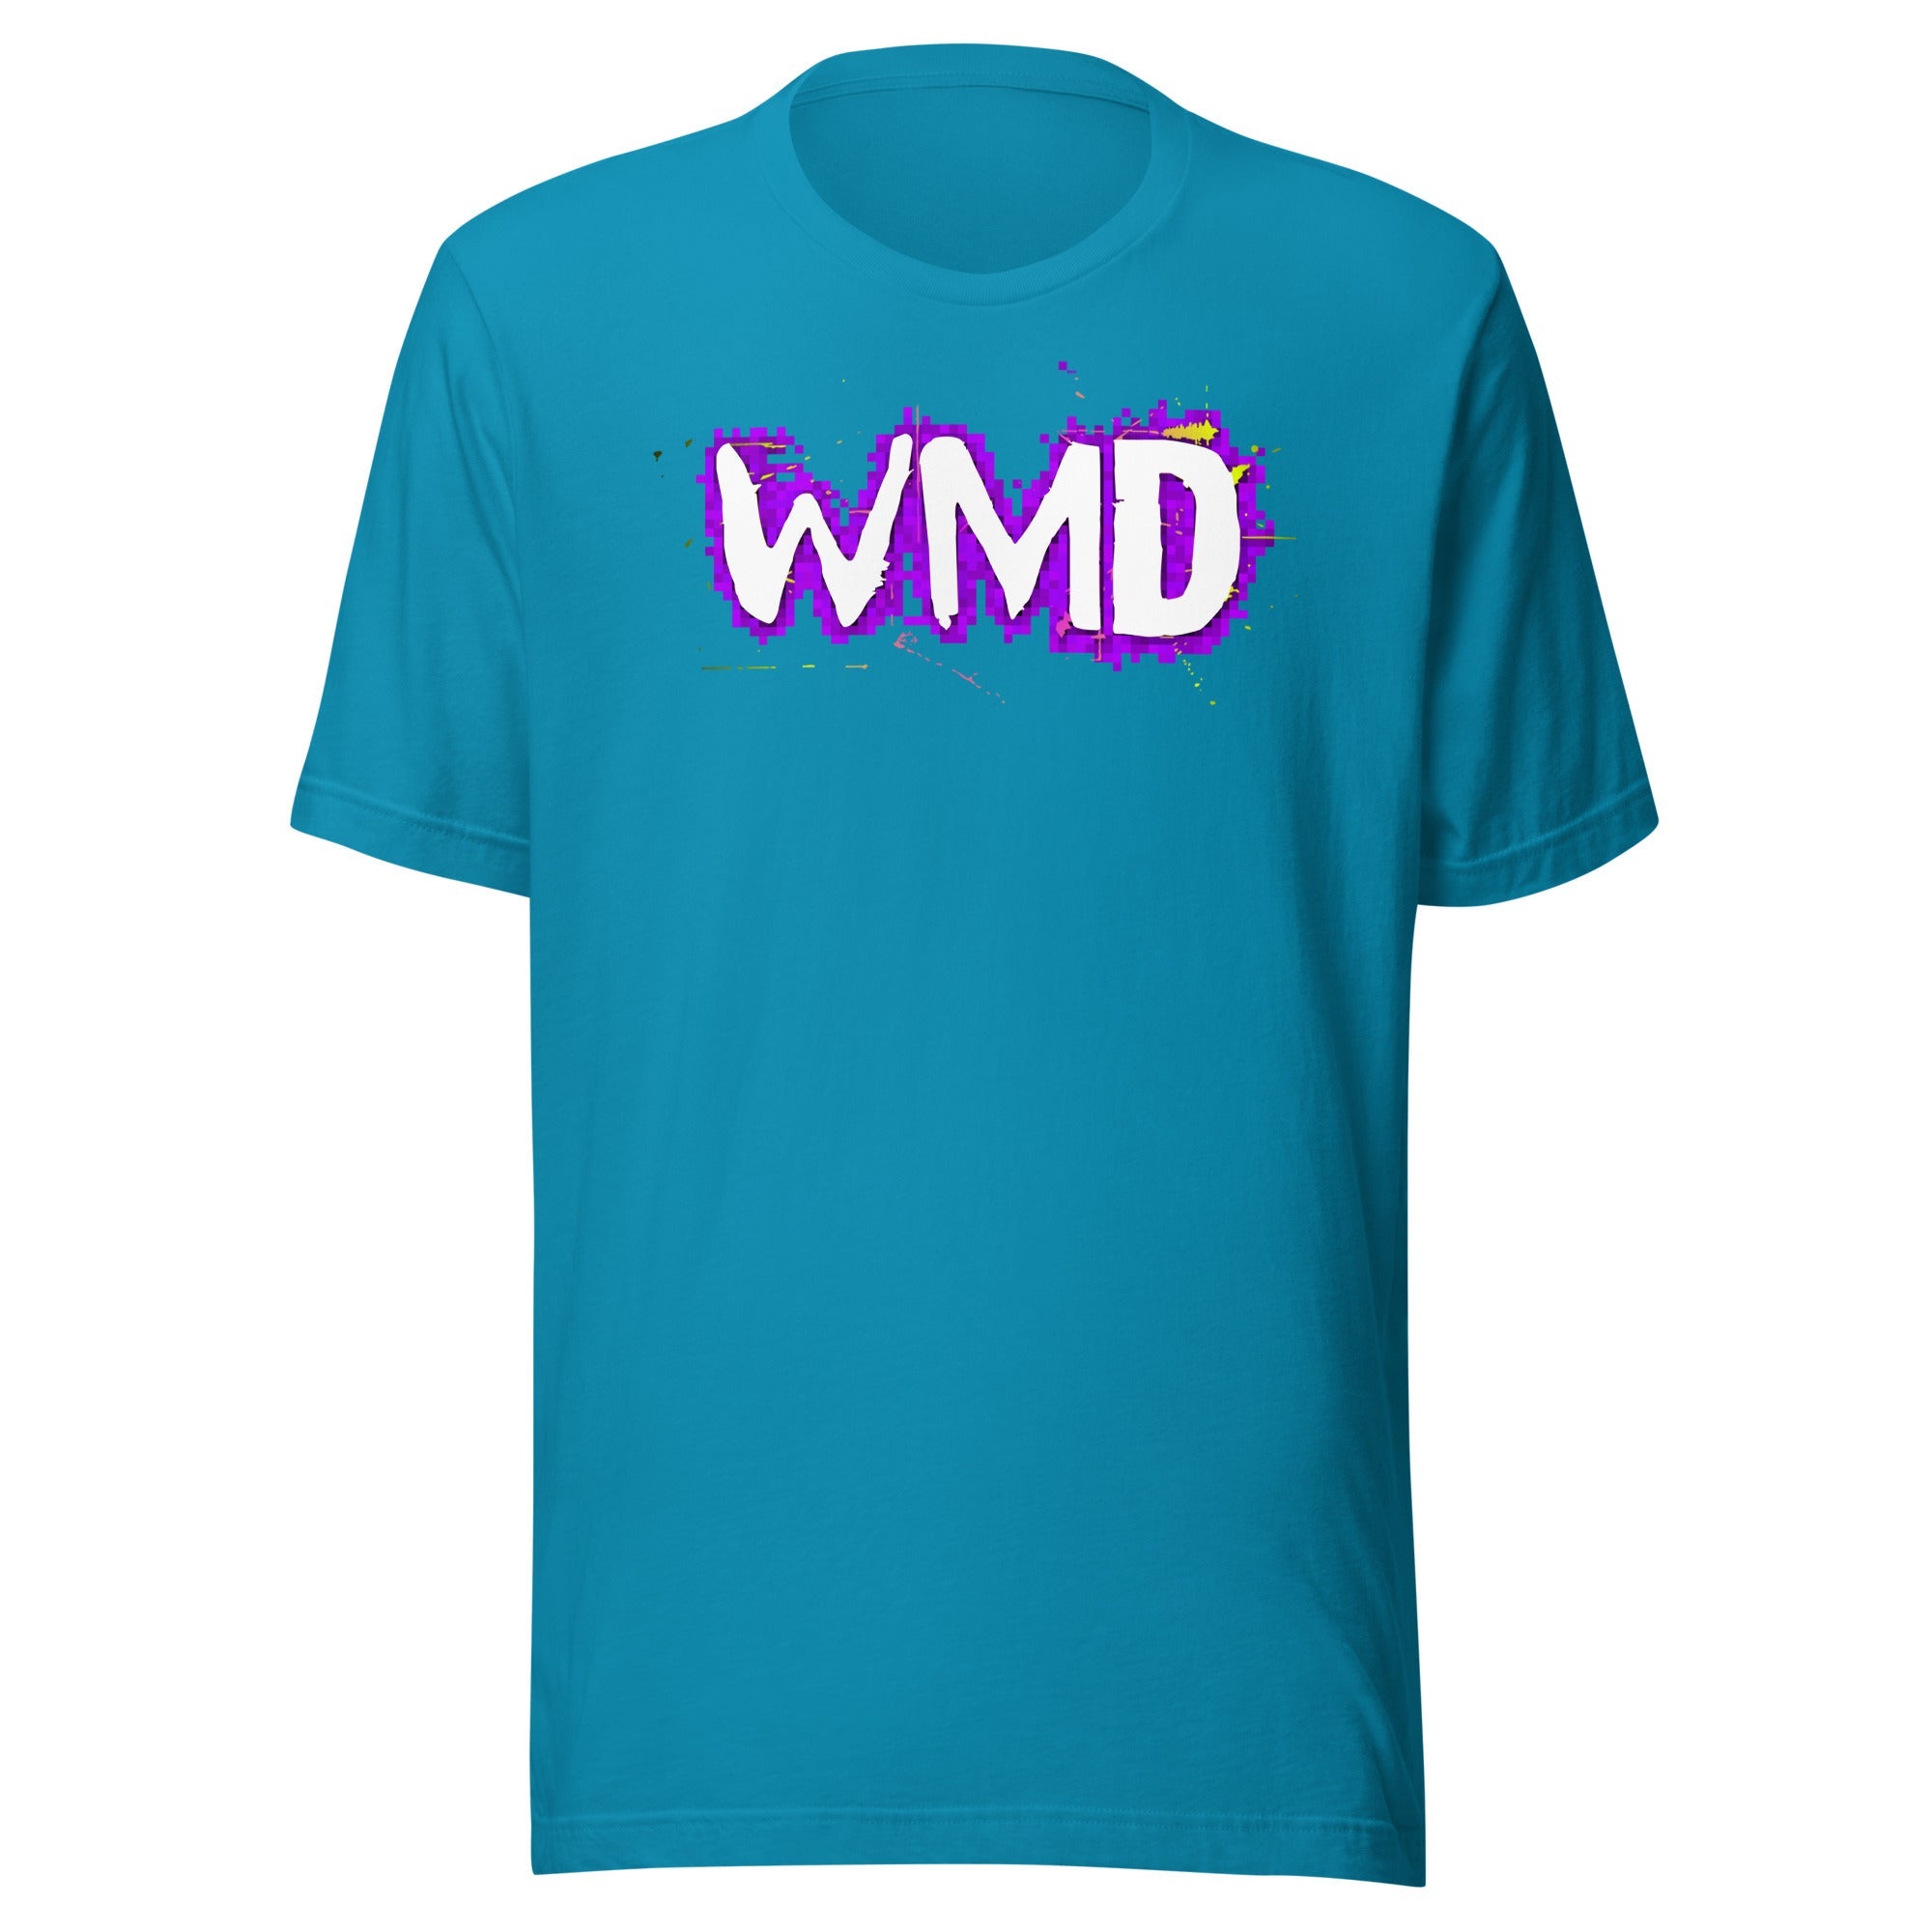 WMD - T Shirt - Old School WMD Logo T Shirt - WMD - Aqua - logo - T-shirt -